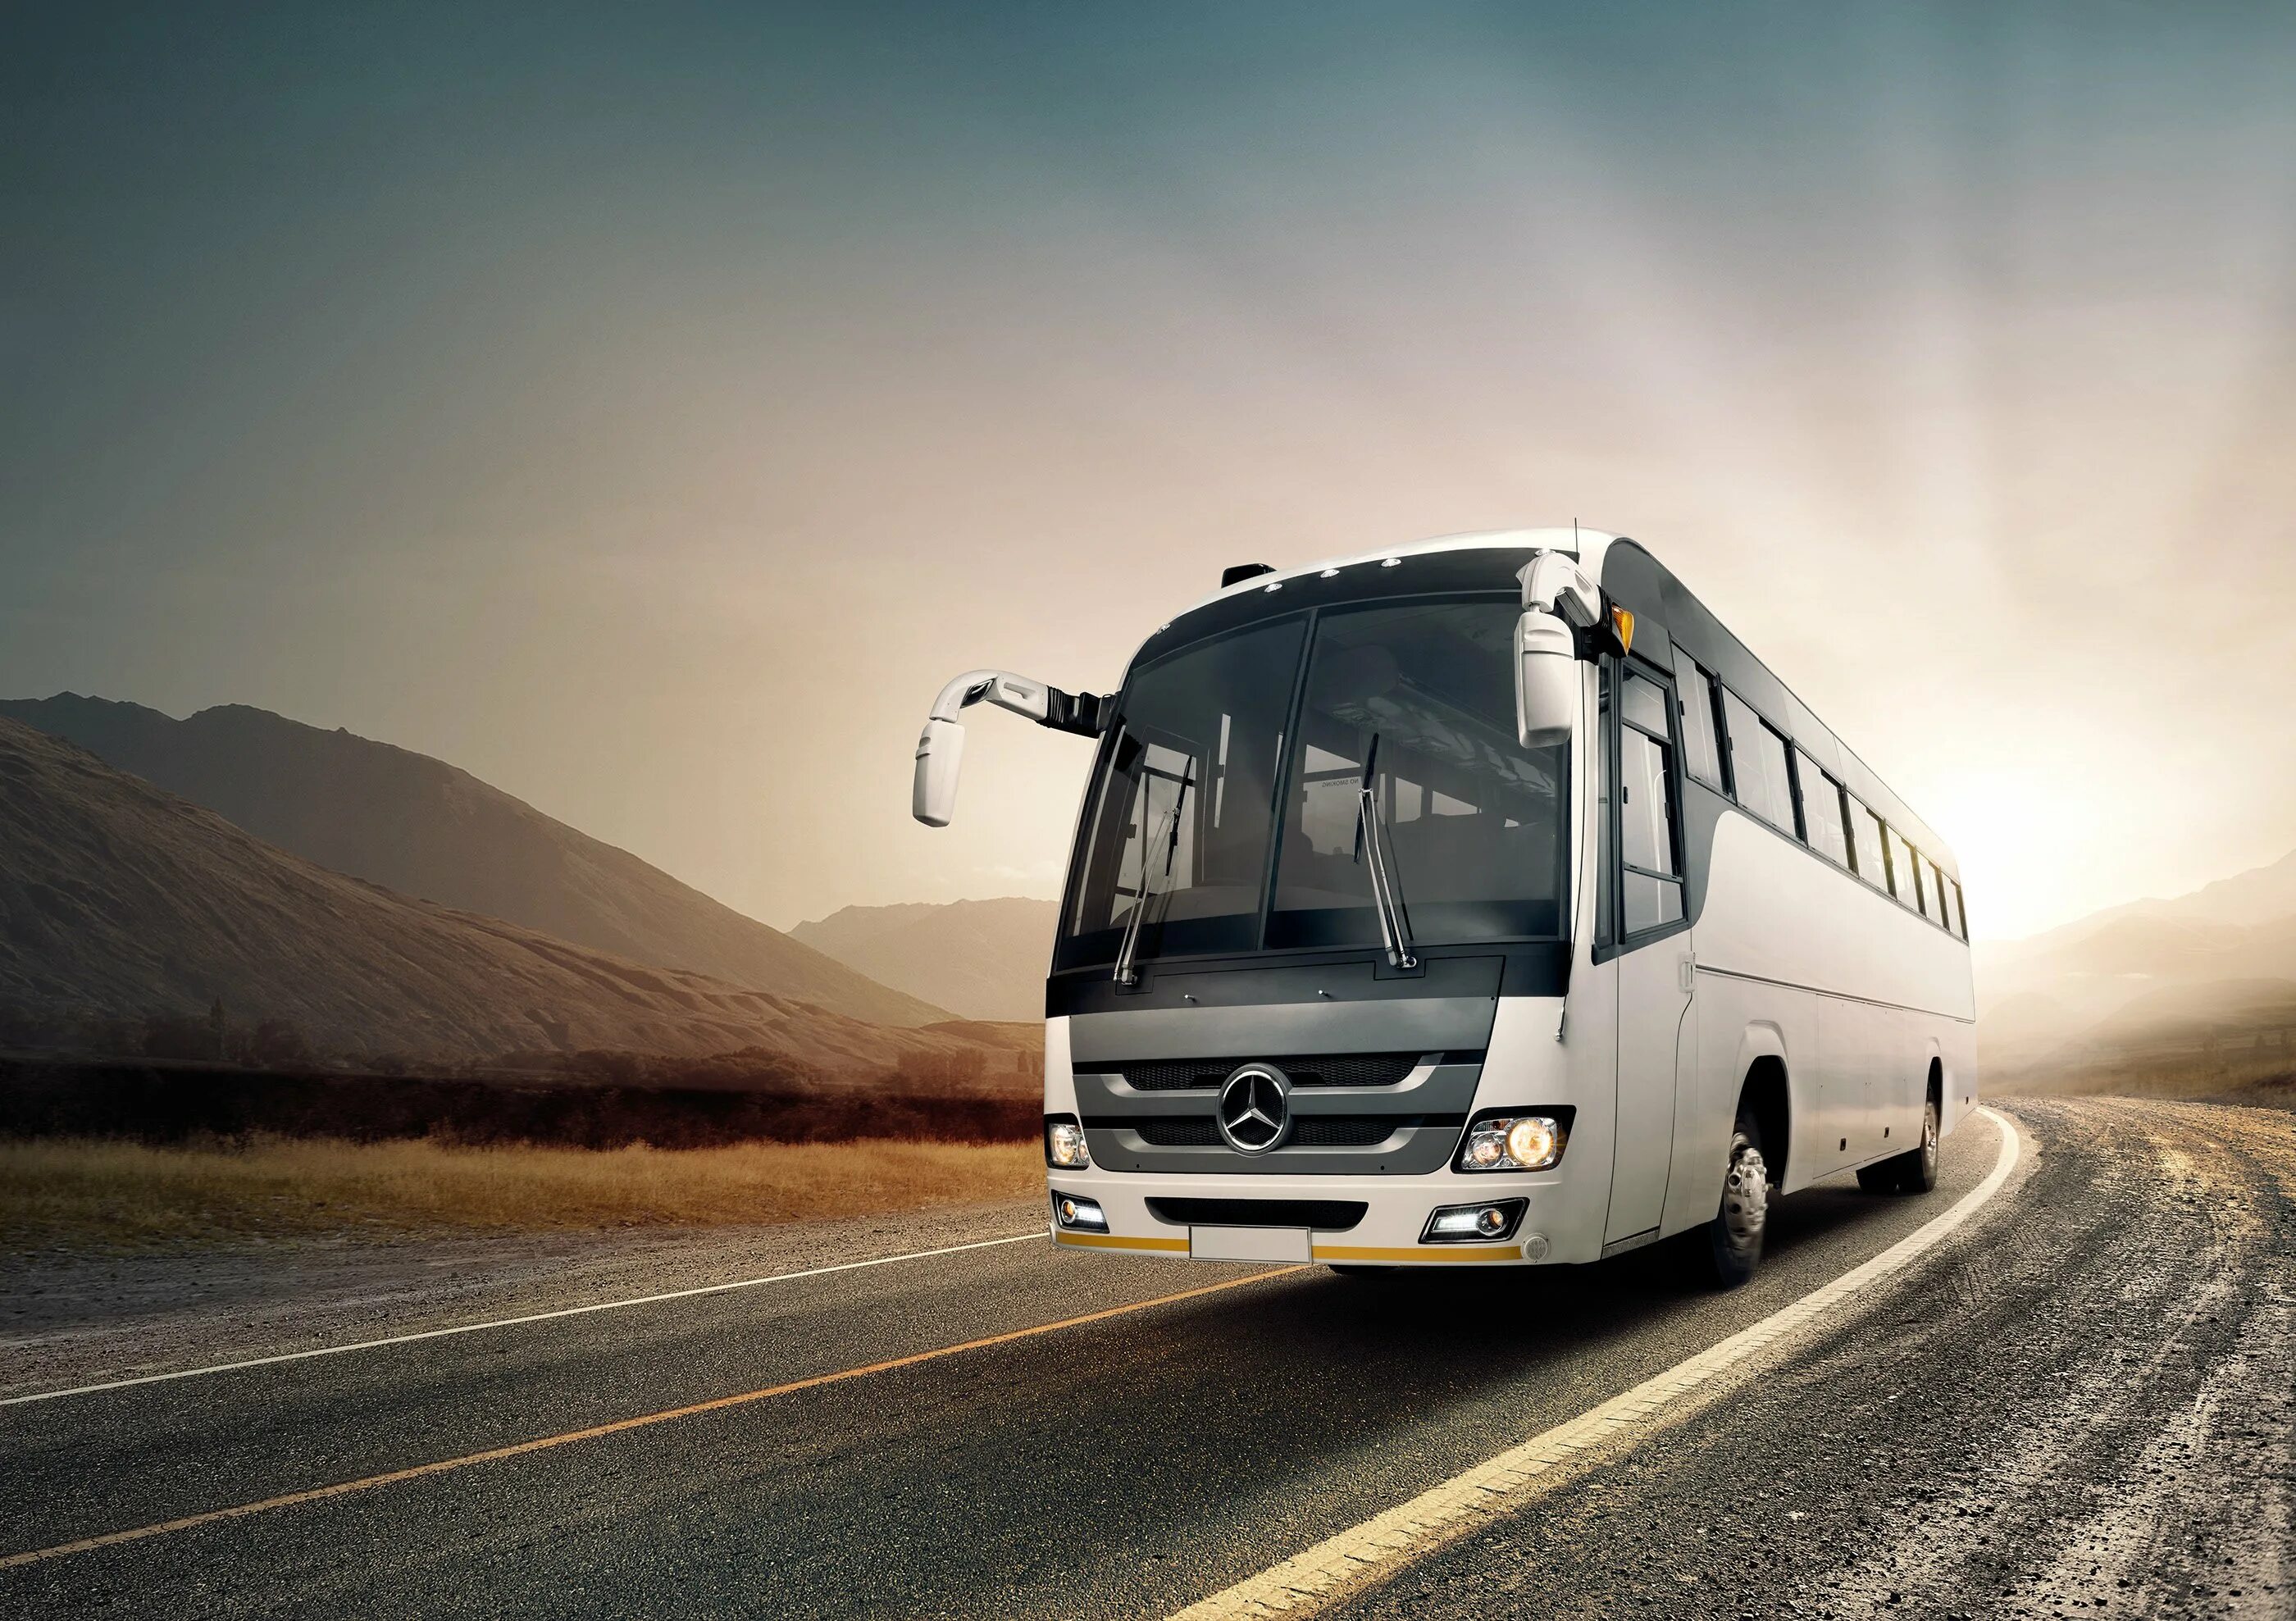 Мерседес Бенц (Bus). Mercedes Benz автобус. Автобус Mercedes (Bus). Mercedes Benz 0408 Bus.